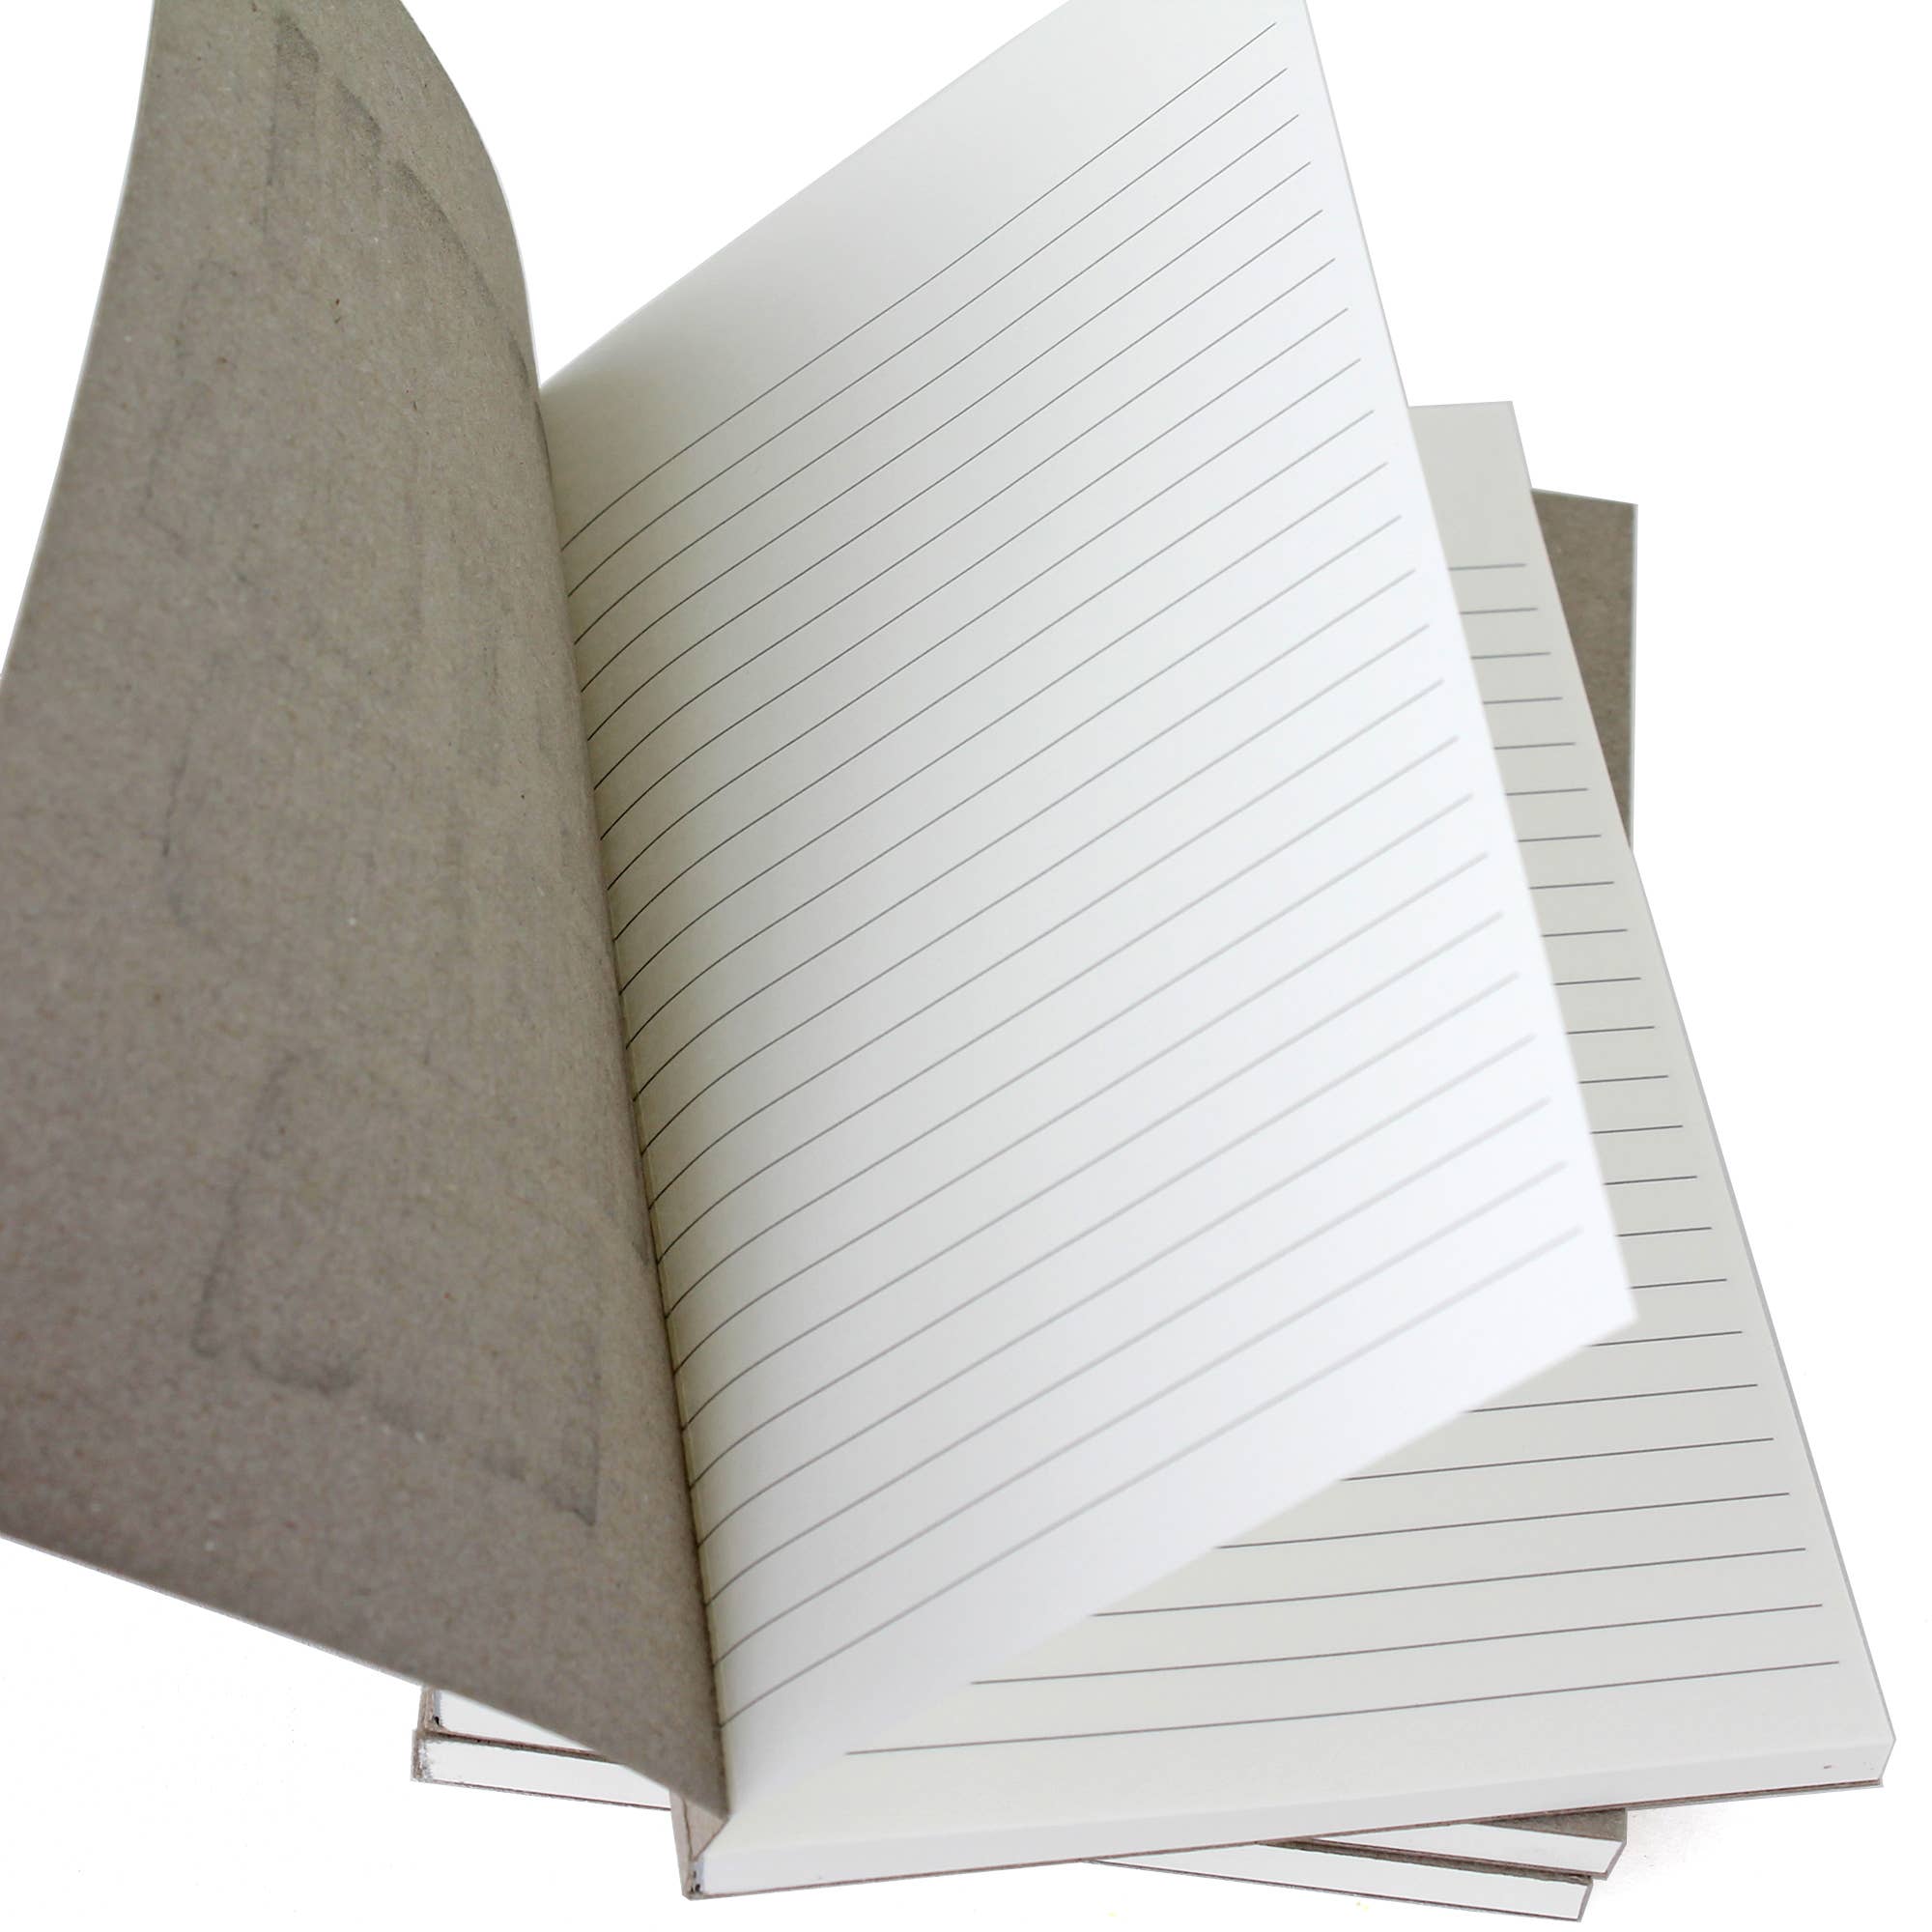 Letterpress Good / Bad Ideas Notebook